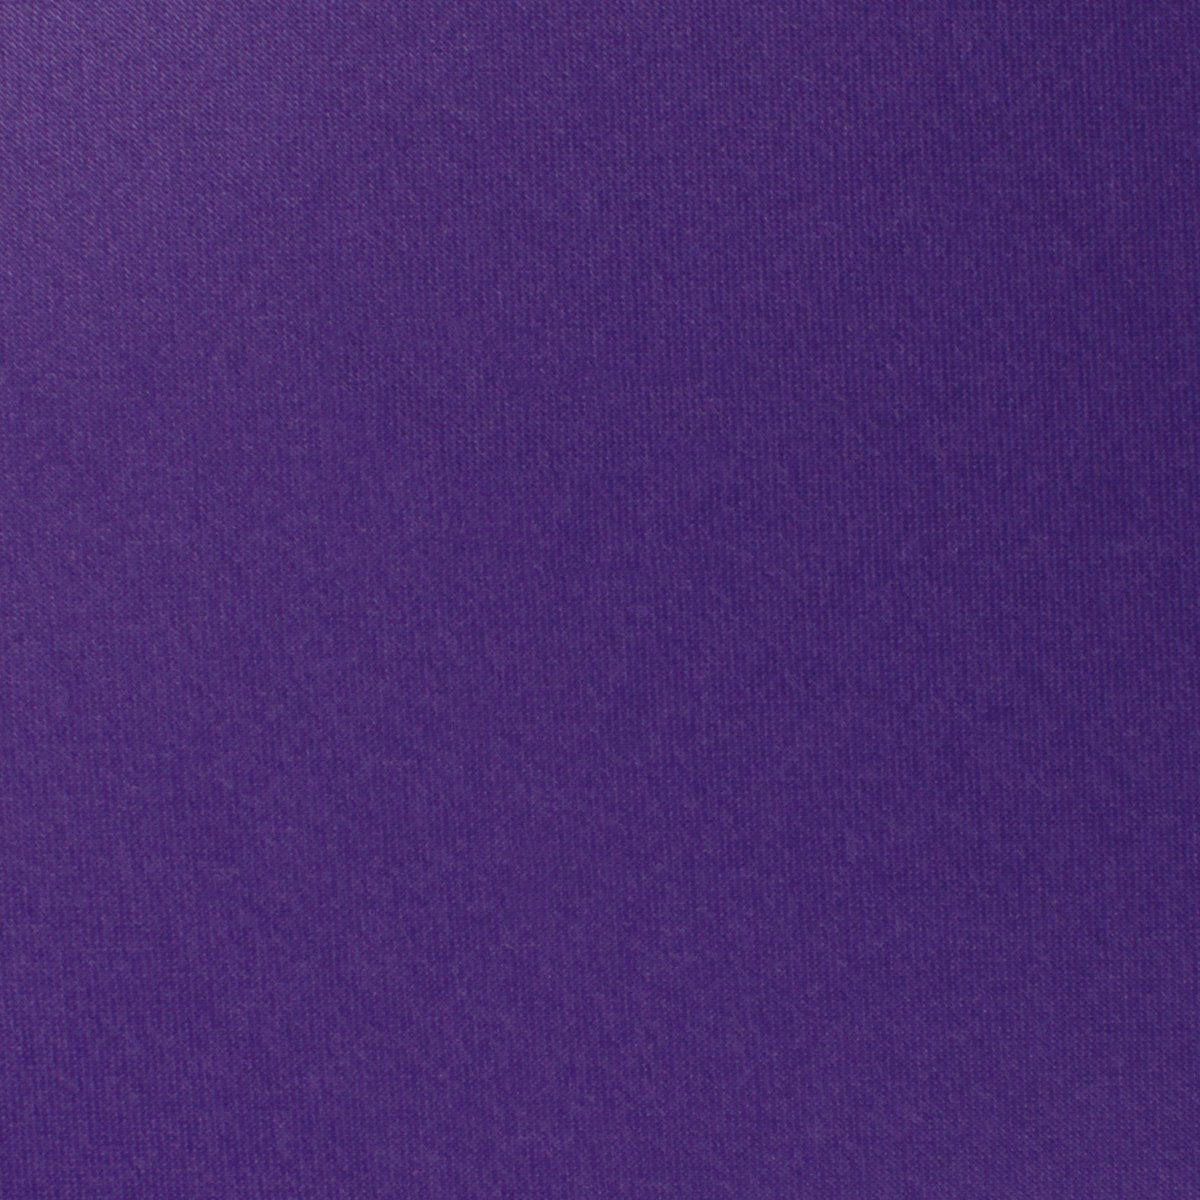 Royal Violet Purple Satin Fabric Swatch